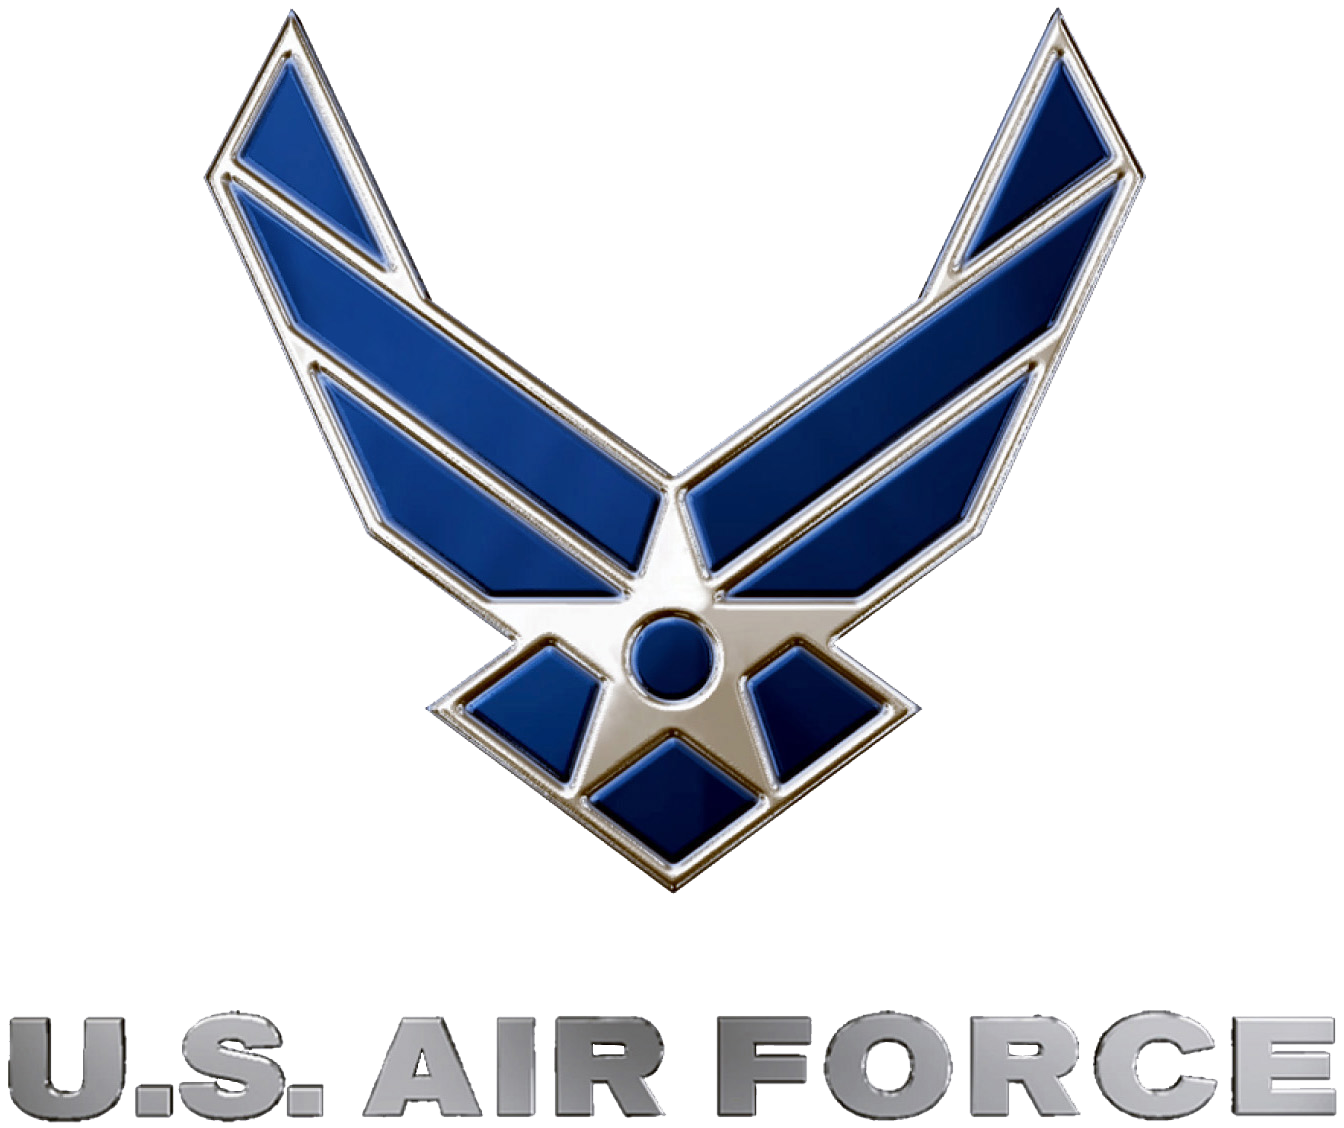 United States Air Force symbol